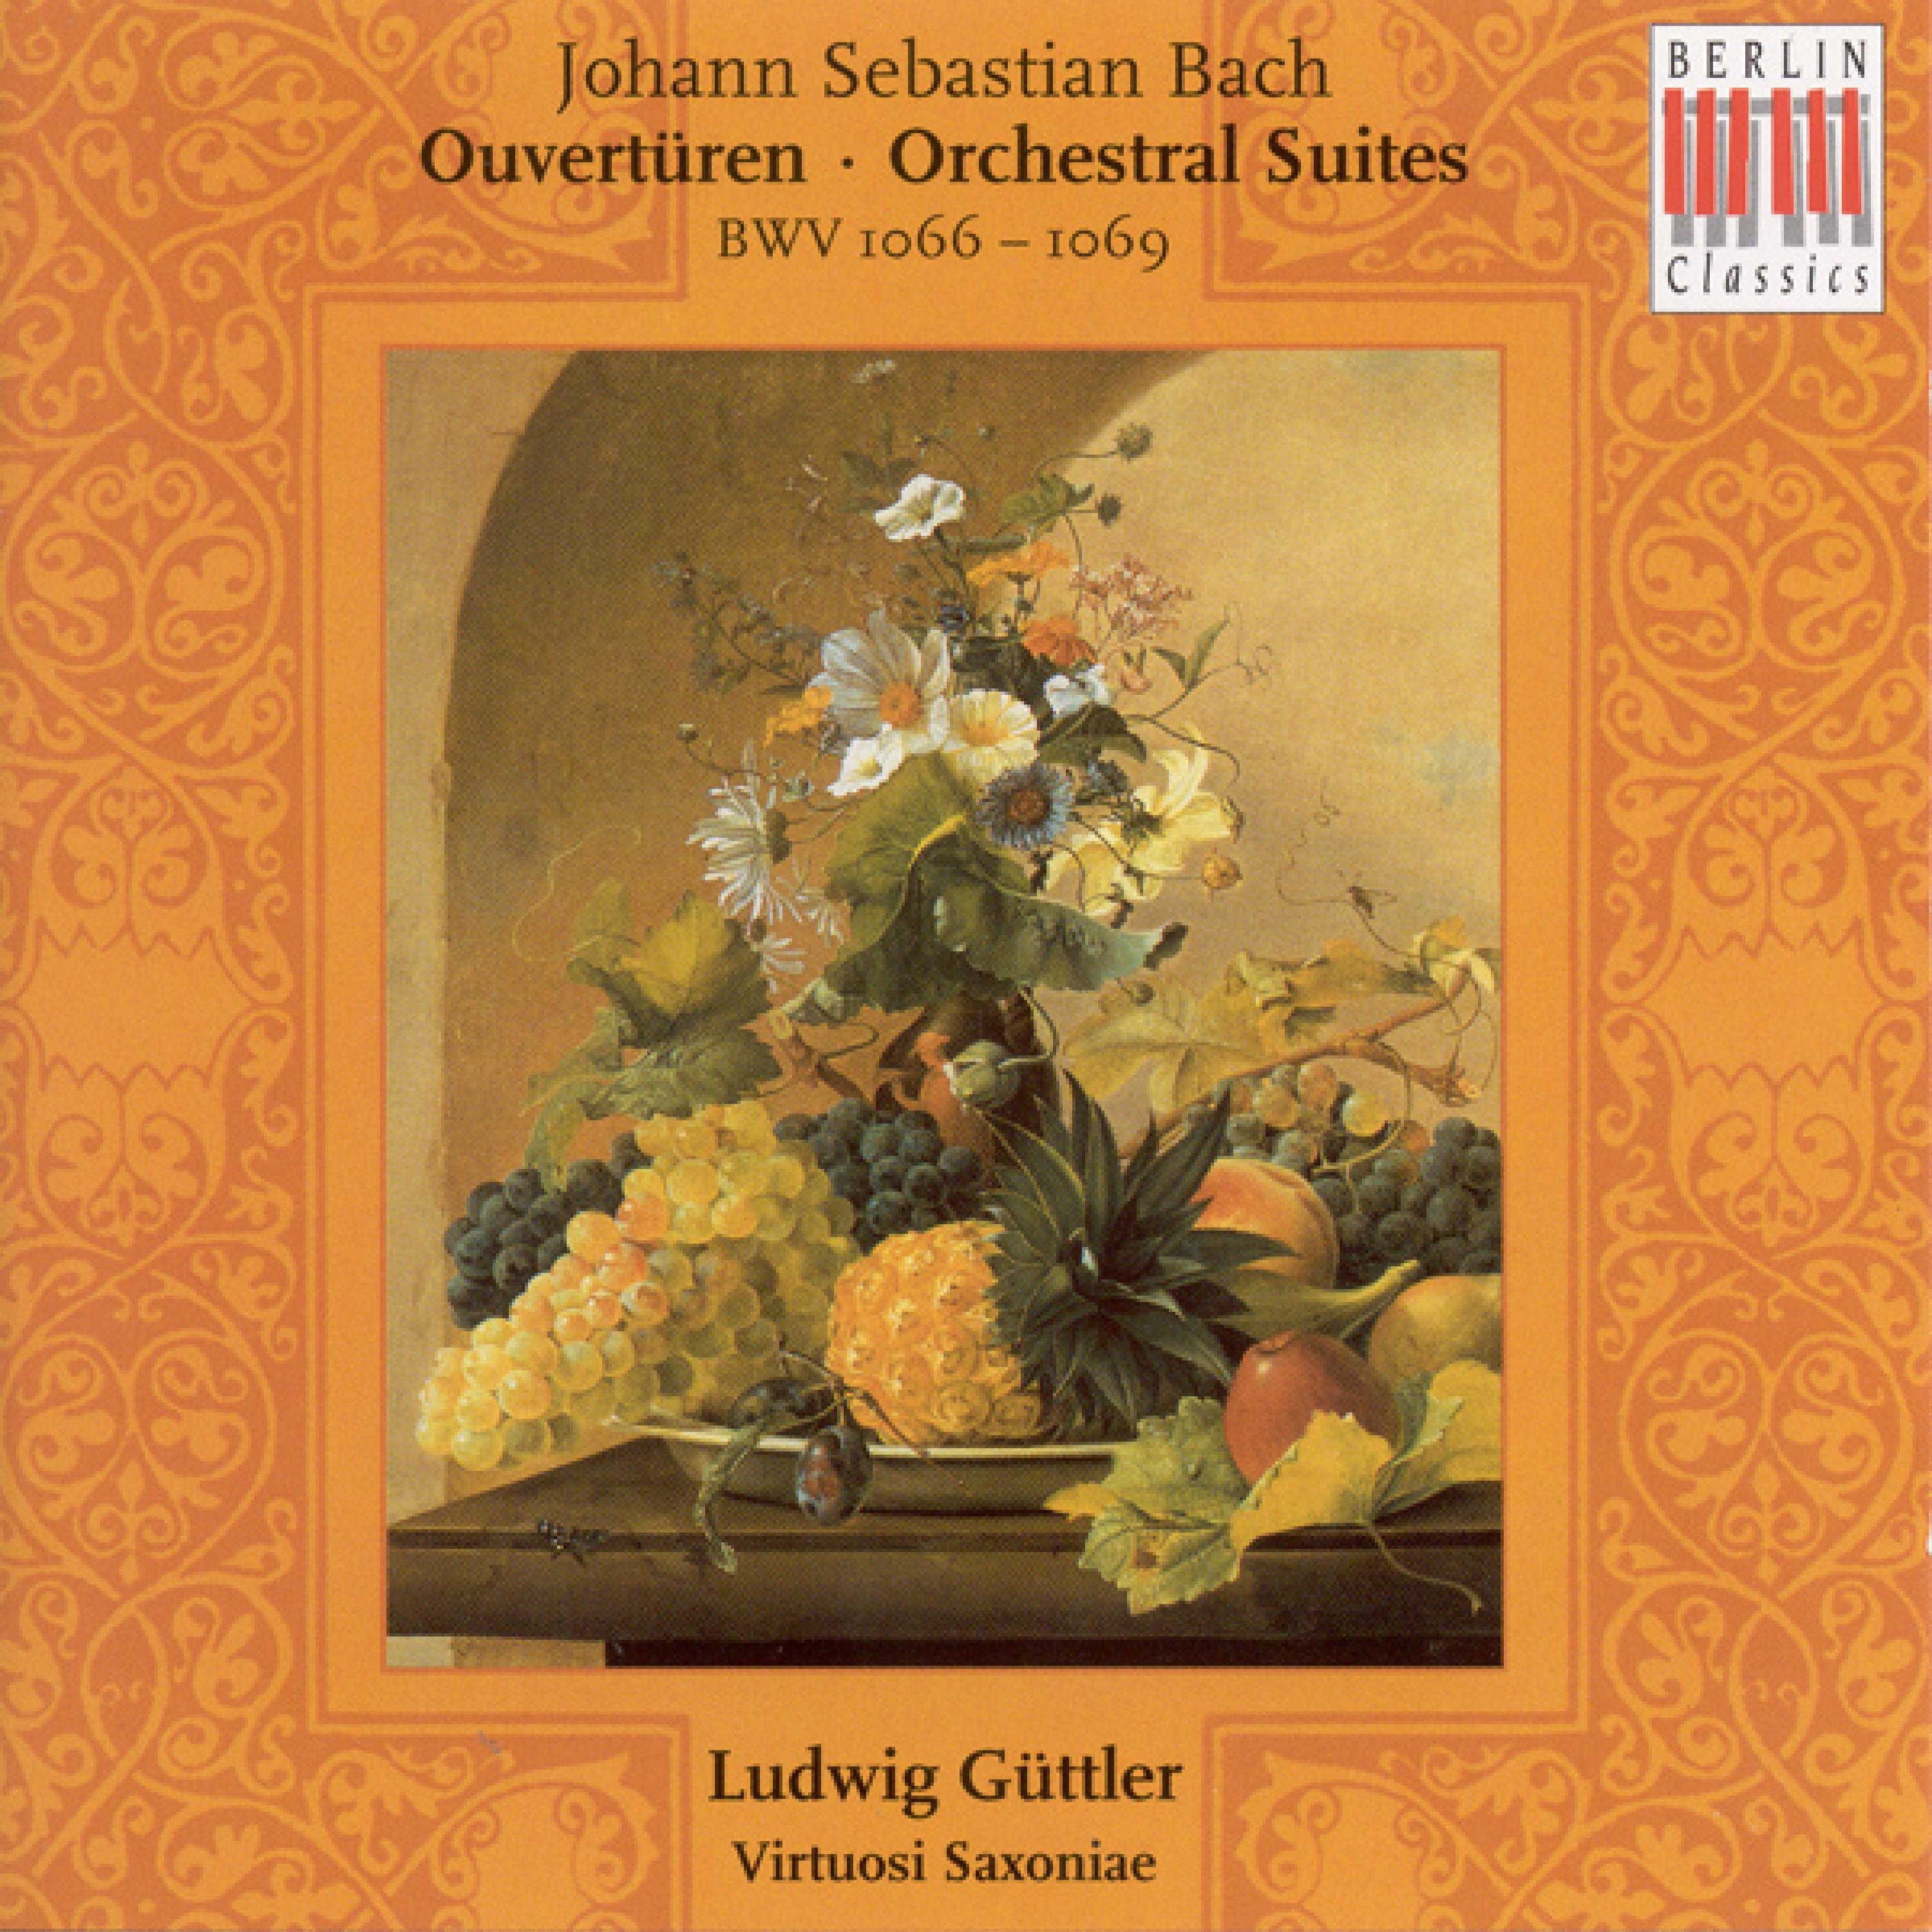 Orchestral Suite No. 1 in C Major, BWV 1066: I. Overture